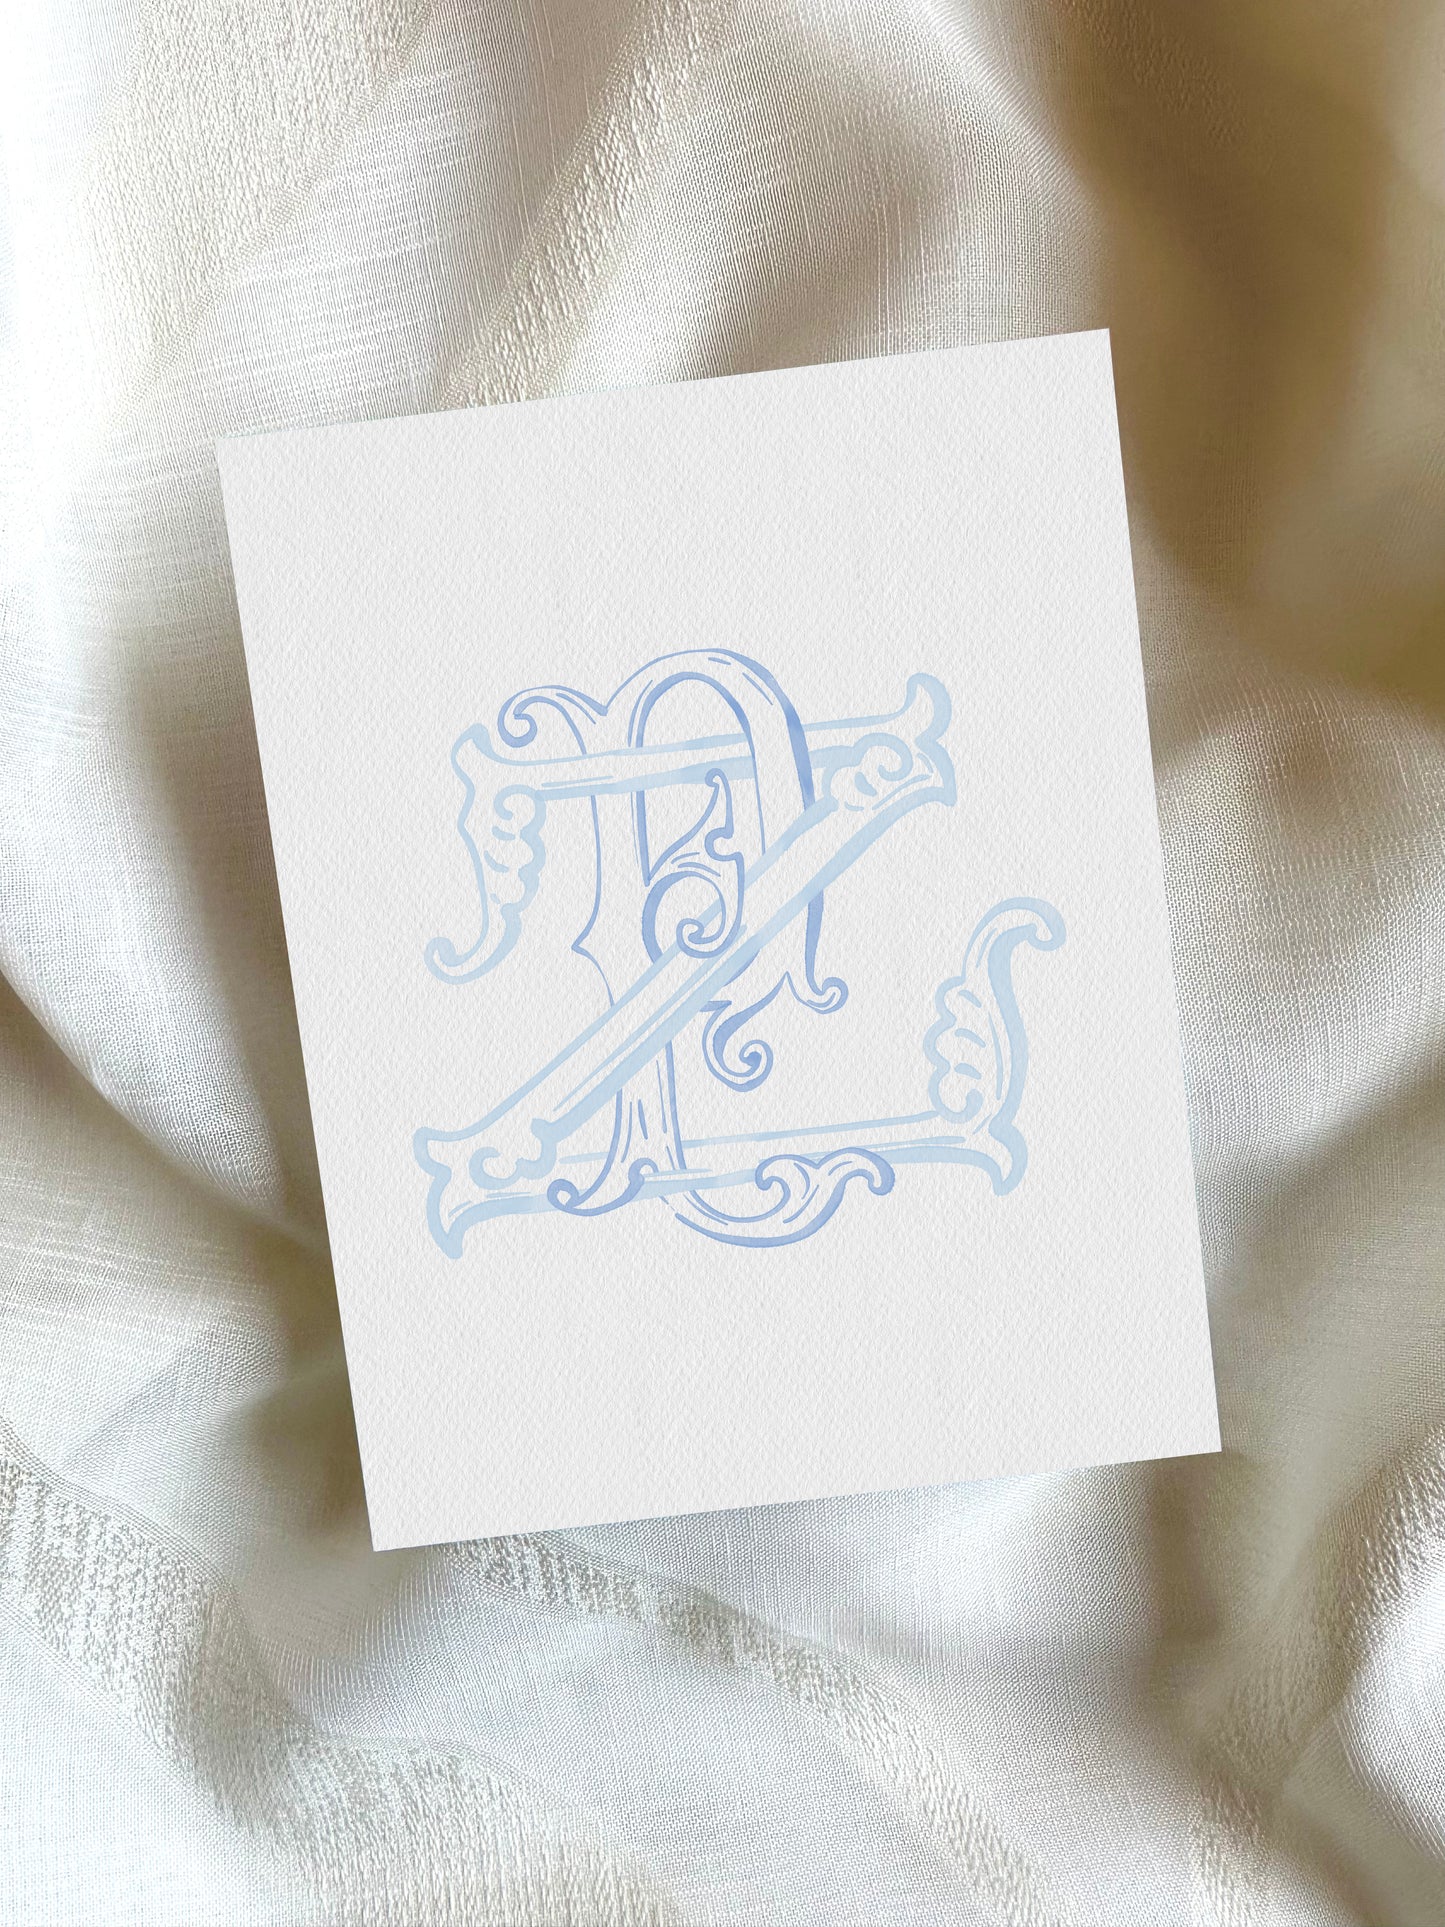 2 Letter Monogram with Letters PZ ZP | Digital Download - Wedding Monogram SVG, Personal Logo, Wedding Logo for Wedding Invitations The Wedding Crest Lab